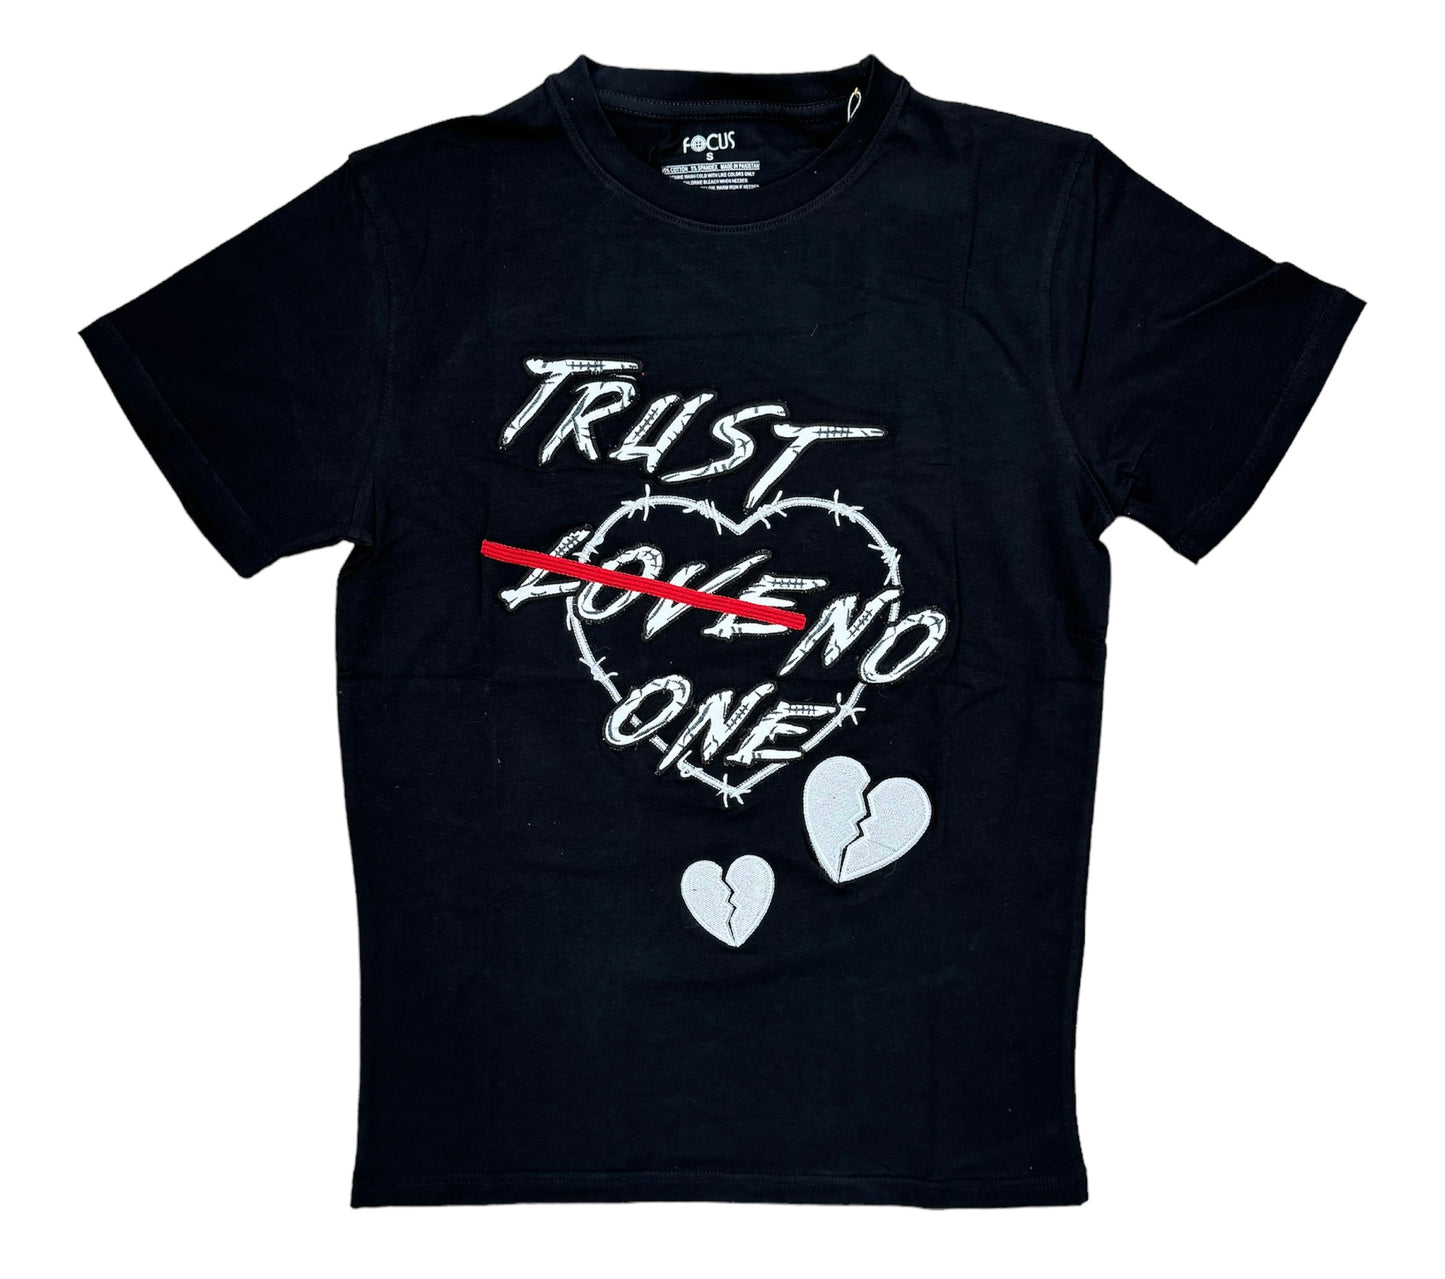 Focus Trust Love No One Black T-shirt